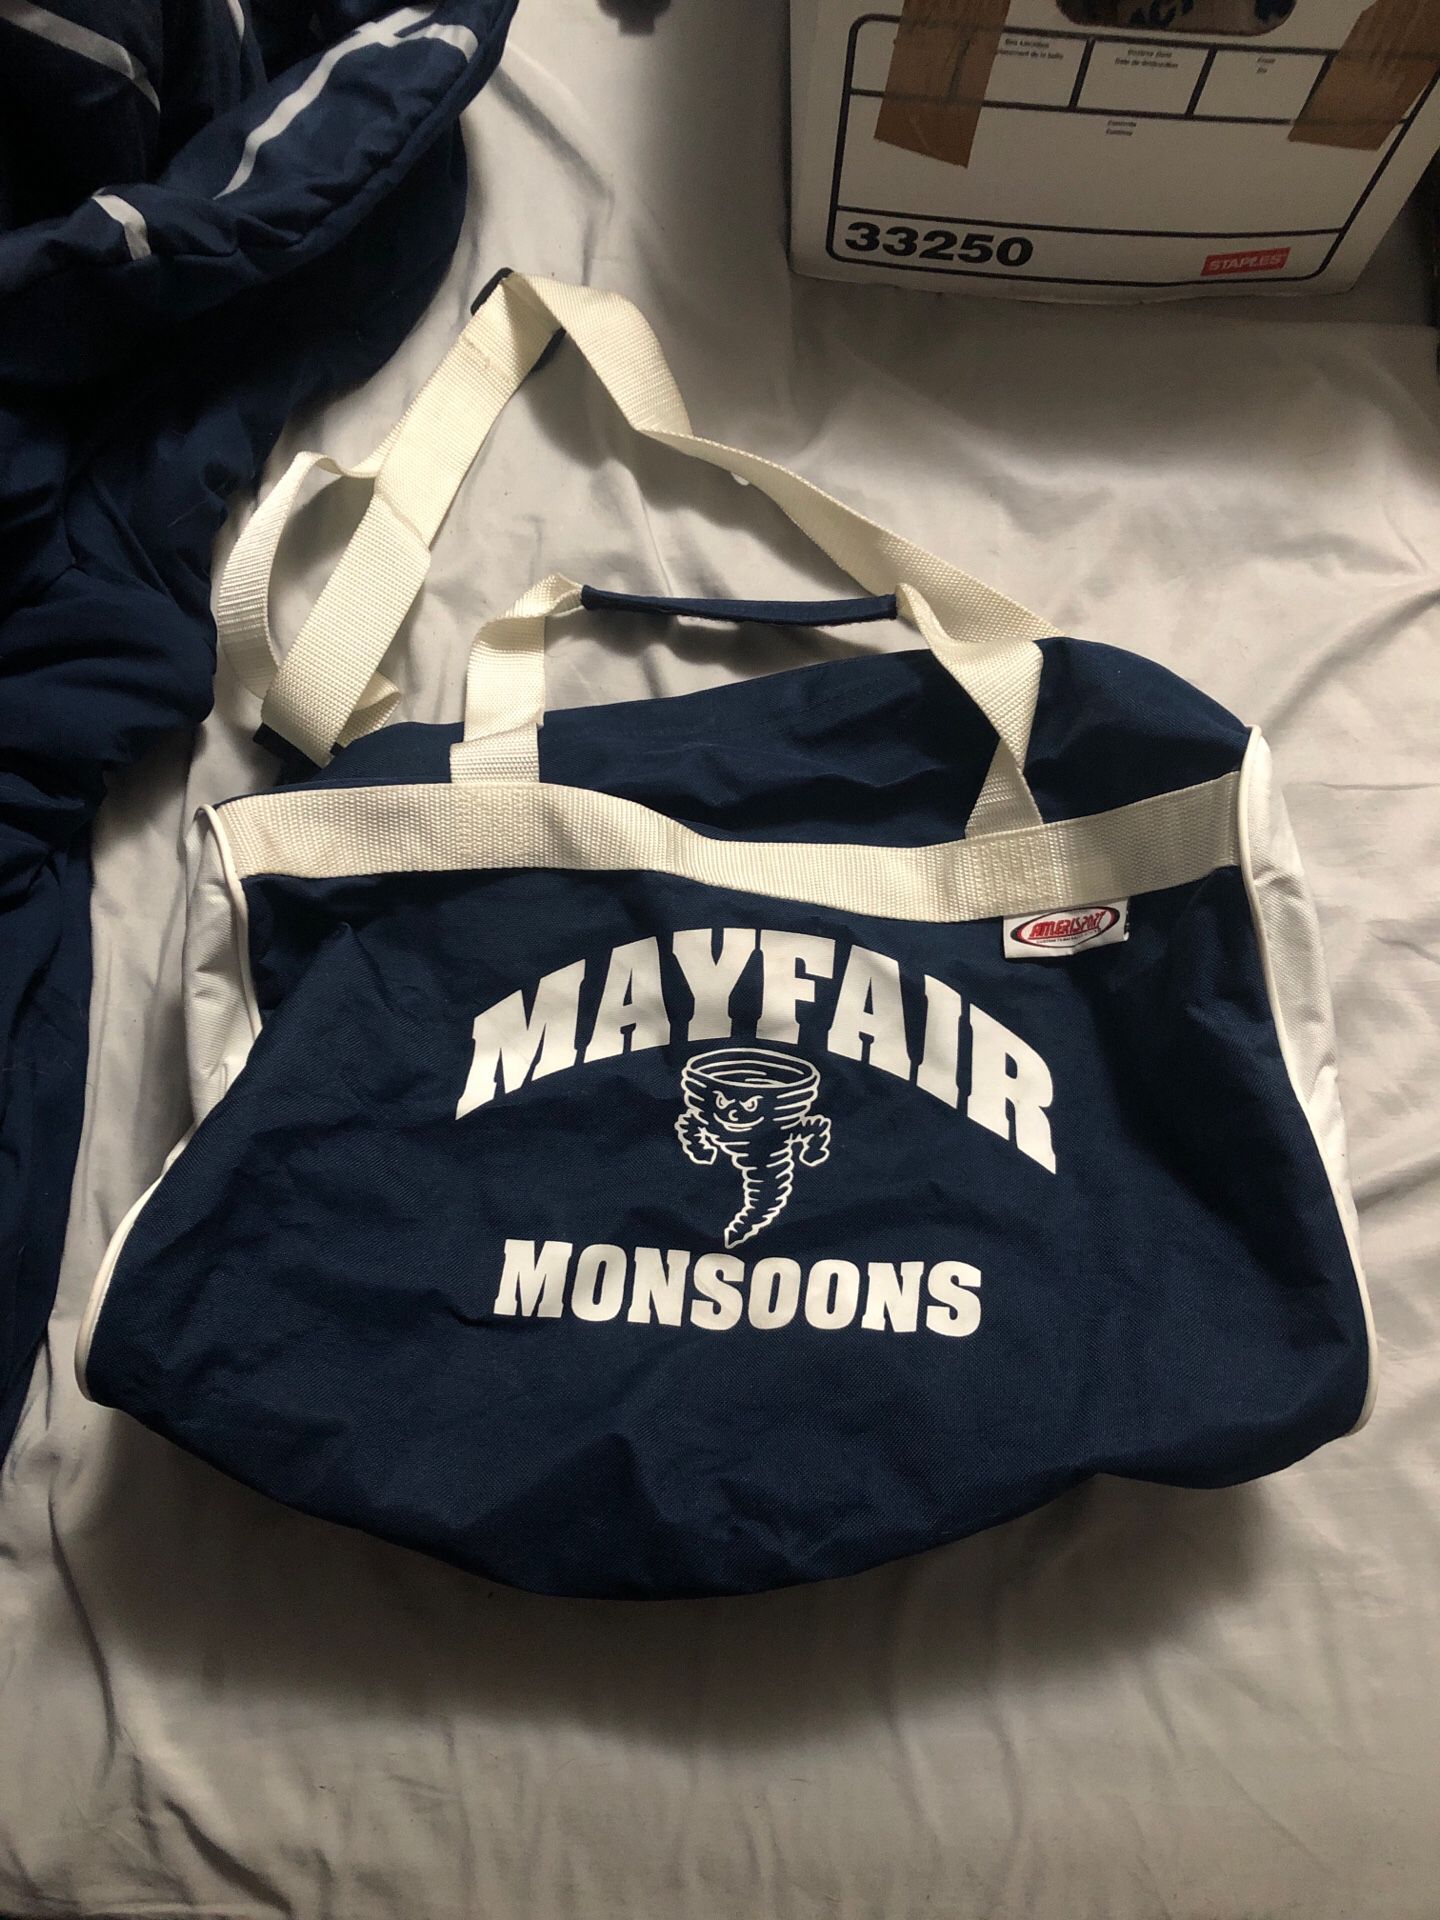 Mayfair Monsoon duffle bag